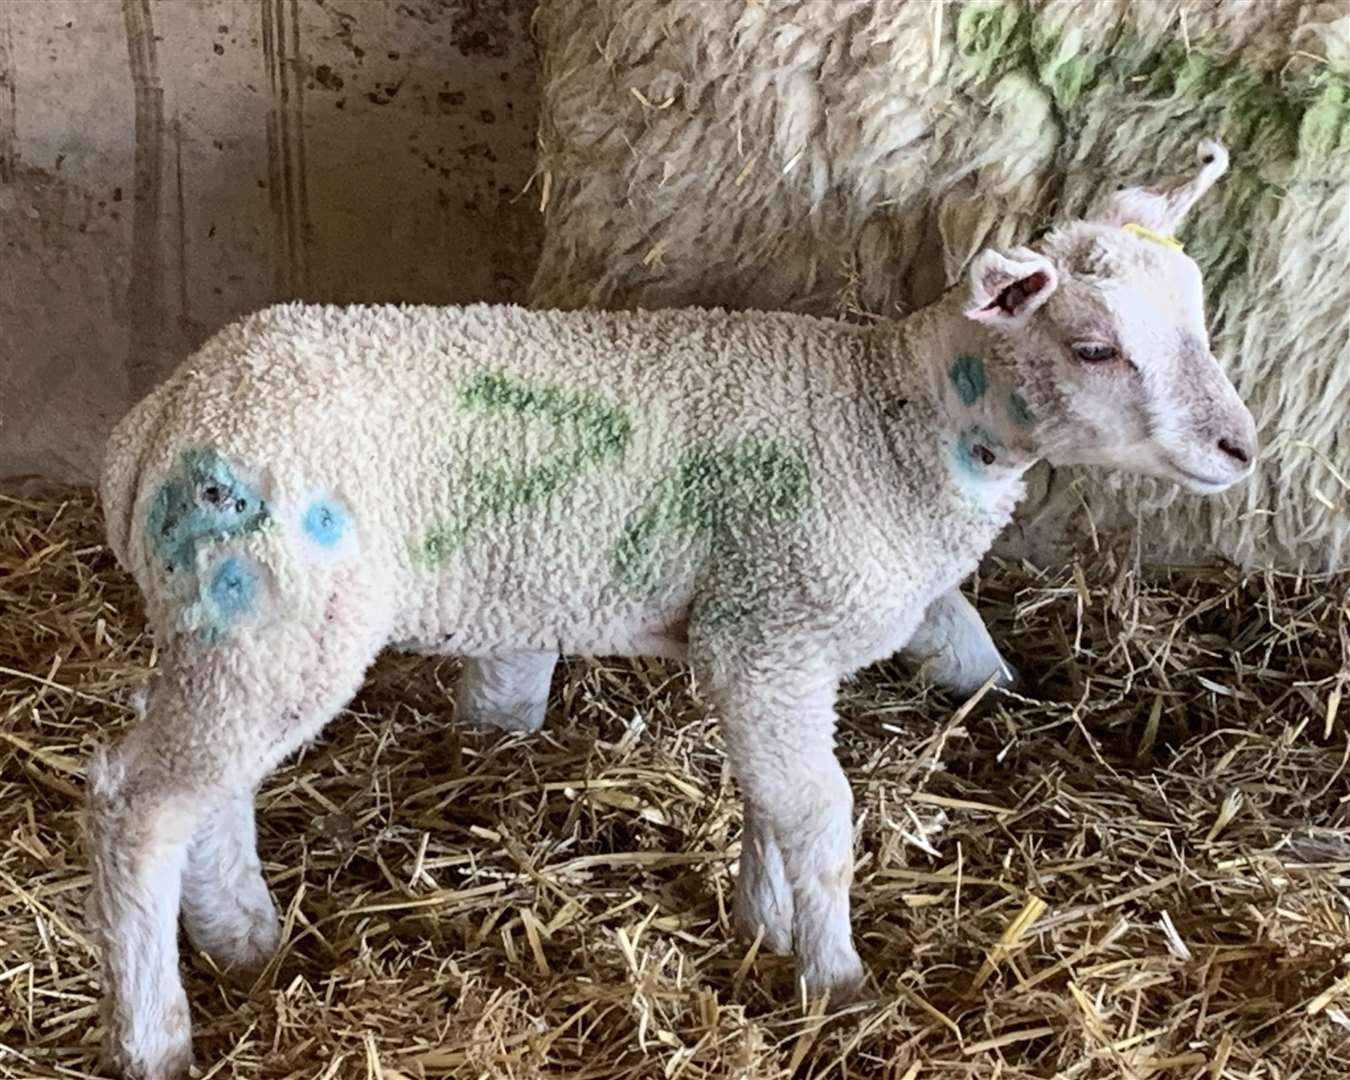 An injured lamb after treatment